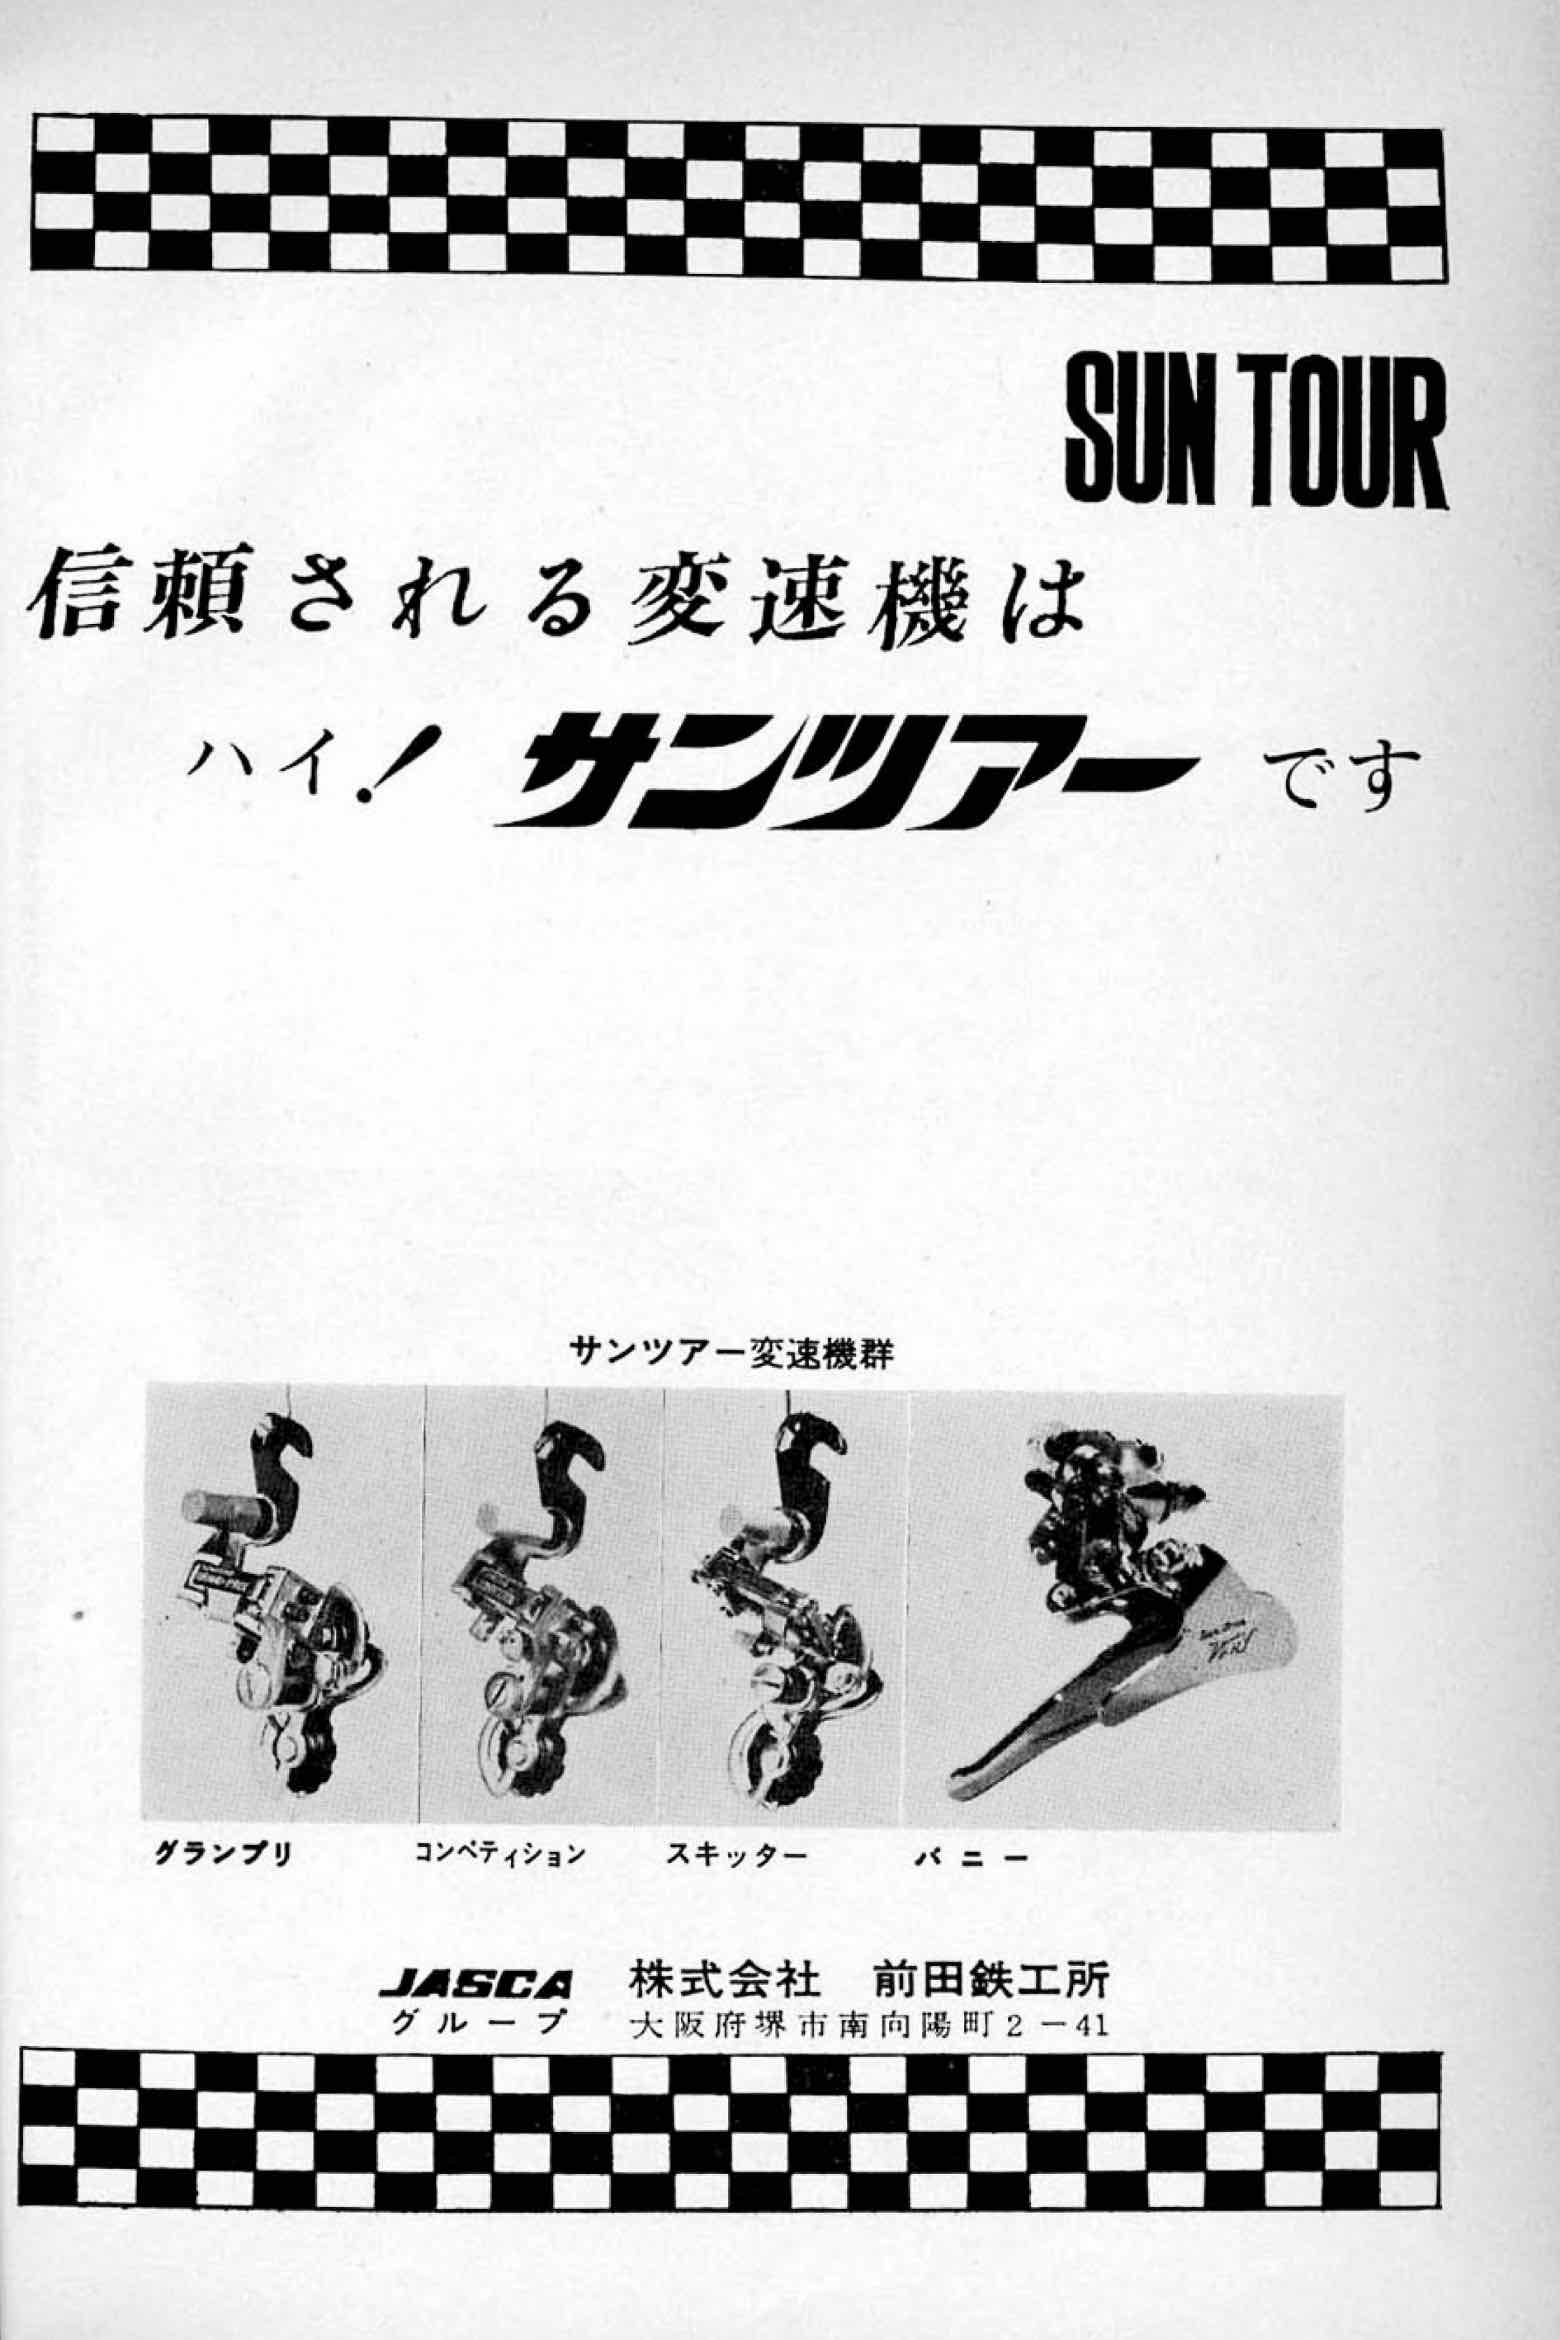 New Cycling January 1966 - SunTour advert main image